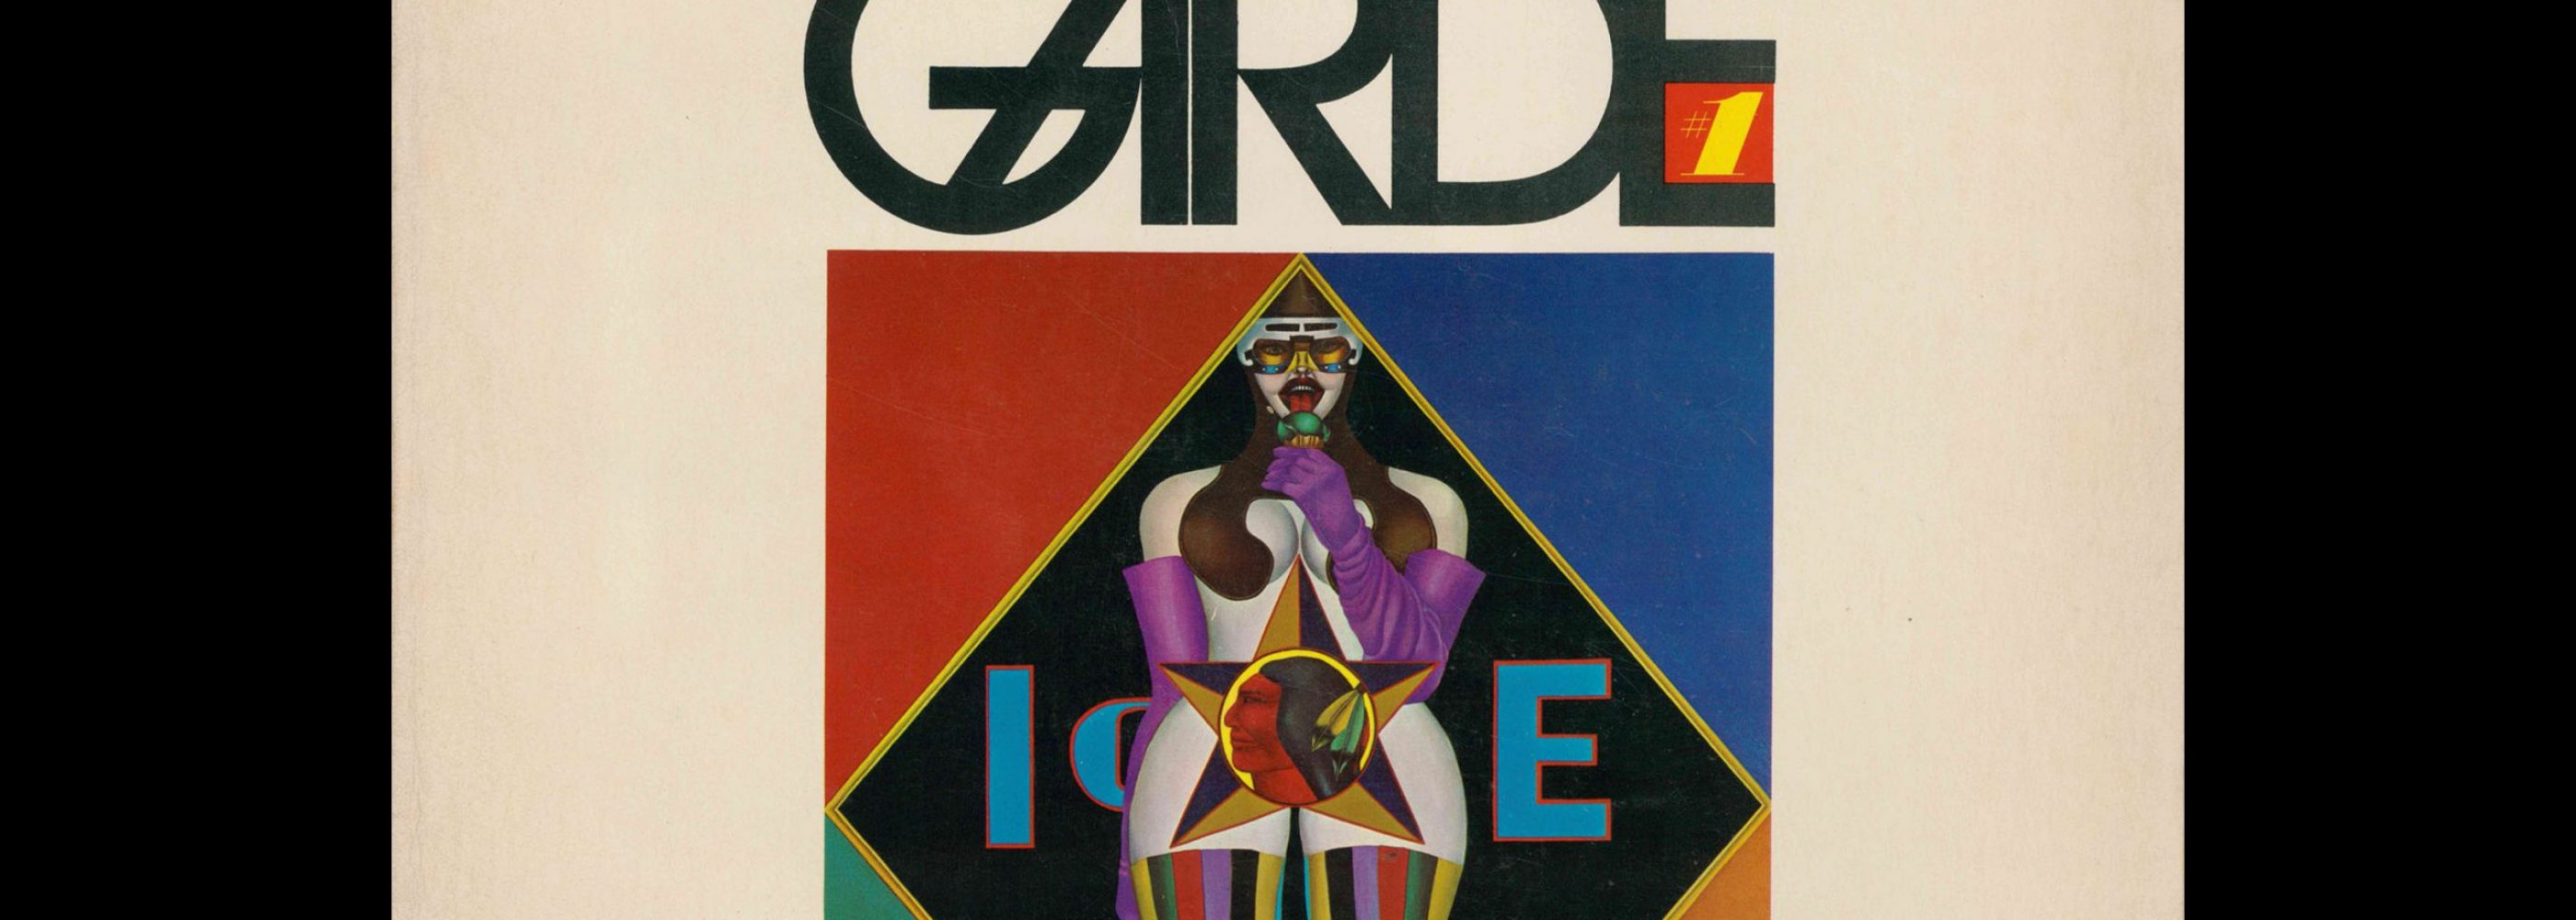 Avant Garde Volume 1, January 1968. Designed by Herb Lubalin